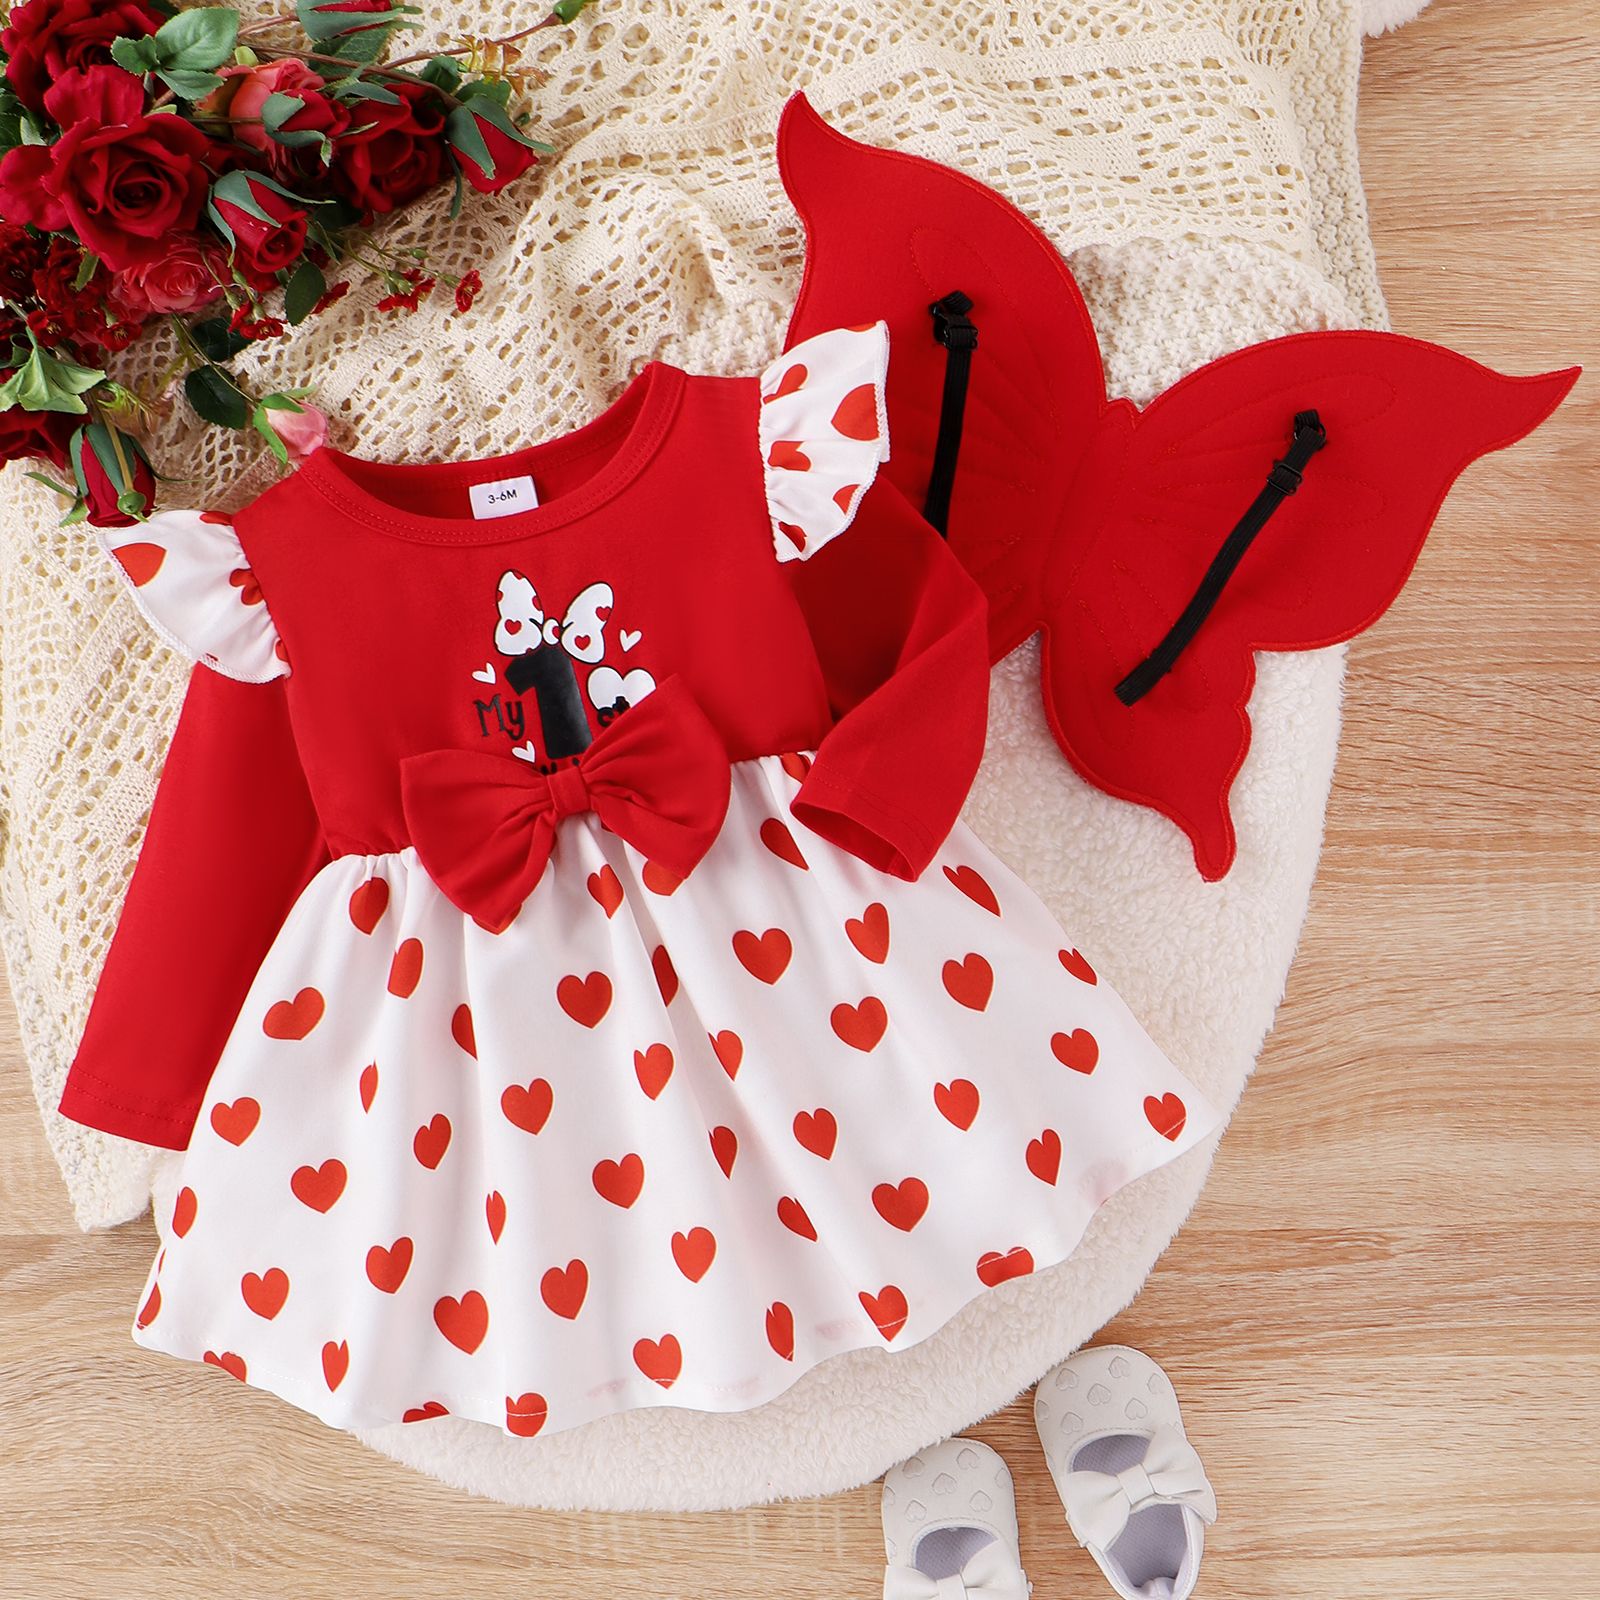 2pcs Baby Girls New Year 95%Cotton Polka Dot Heart Print Dress Set With Wings